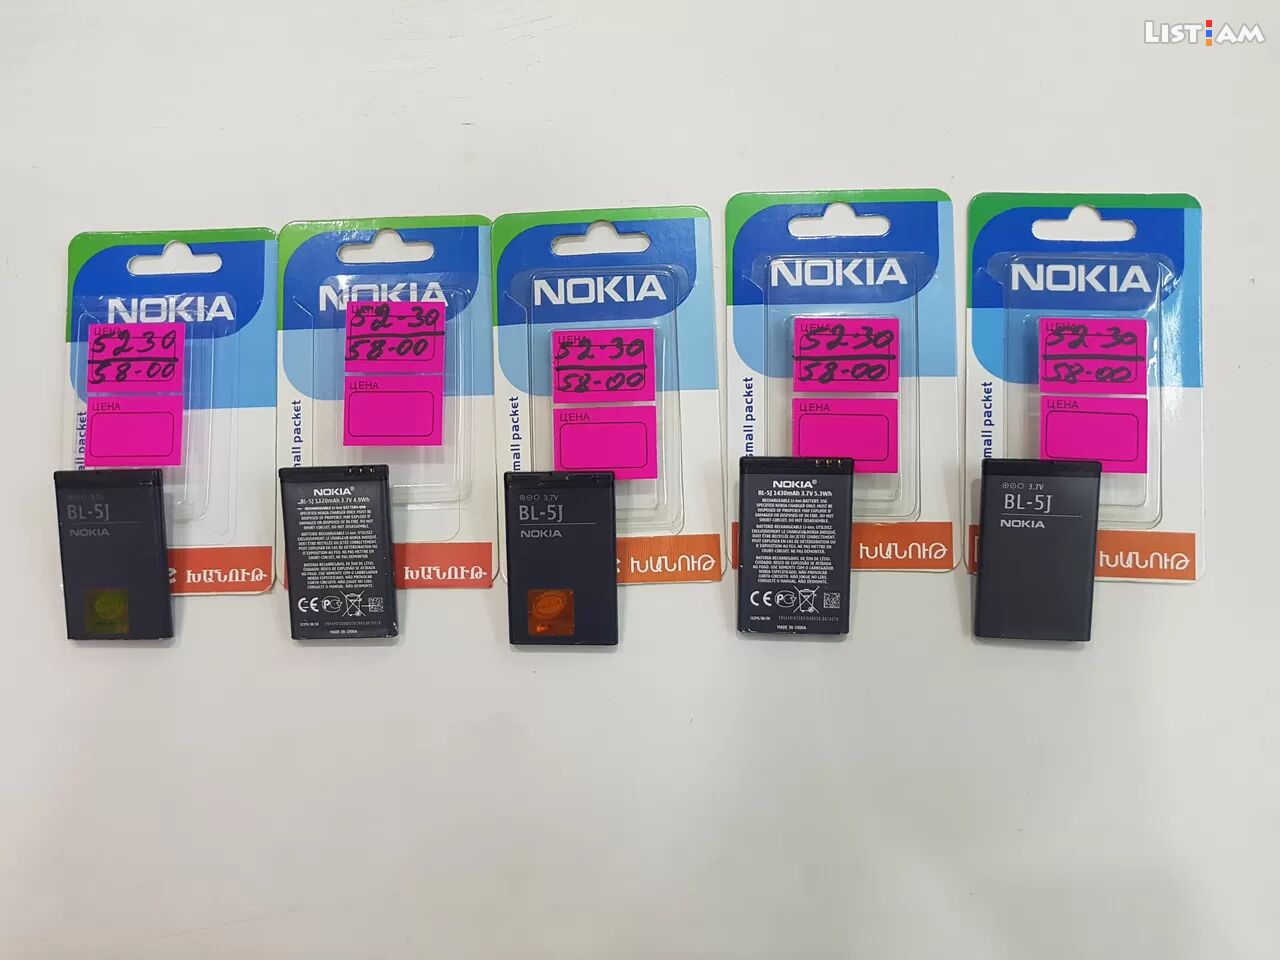 Nokia 5230 battery